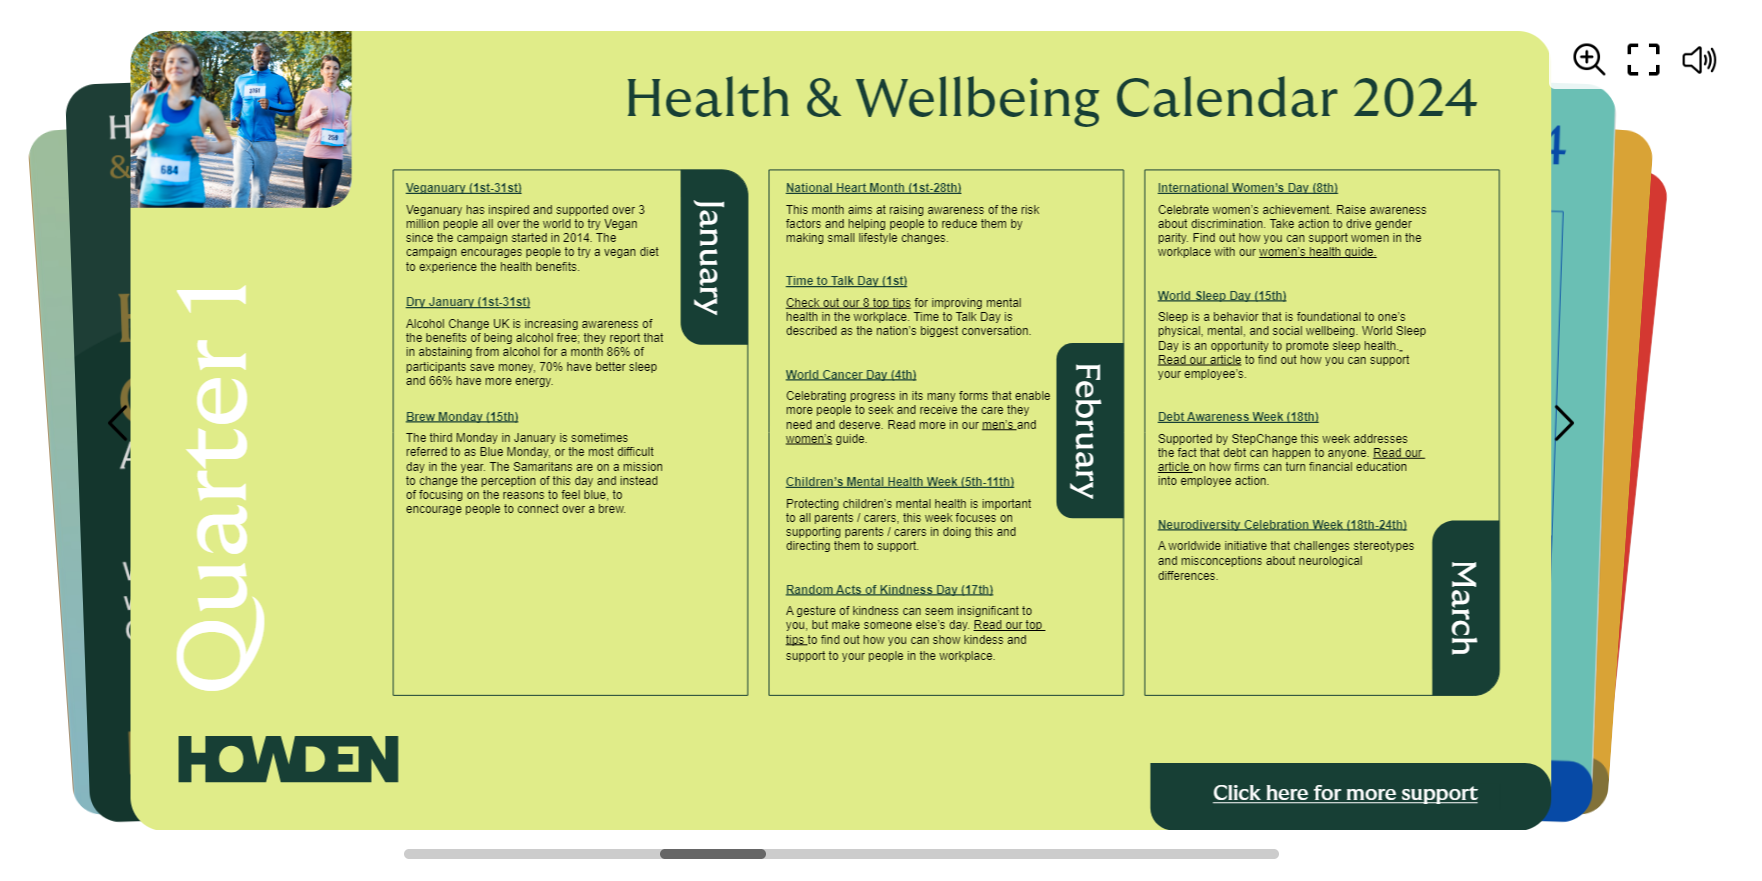 HEBW Wellbeing Calendar 2024